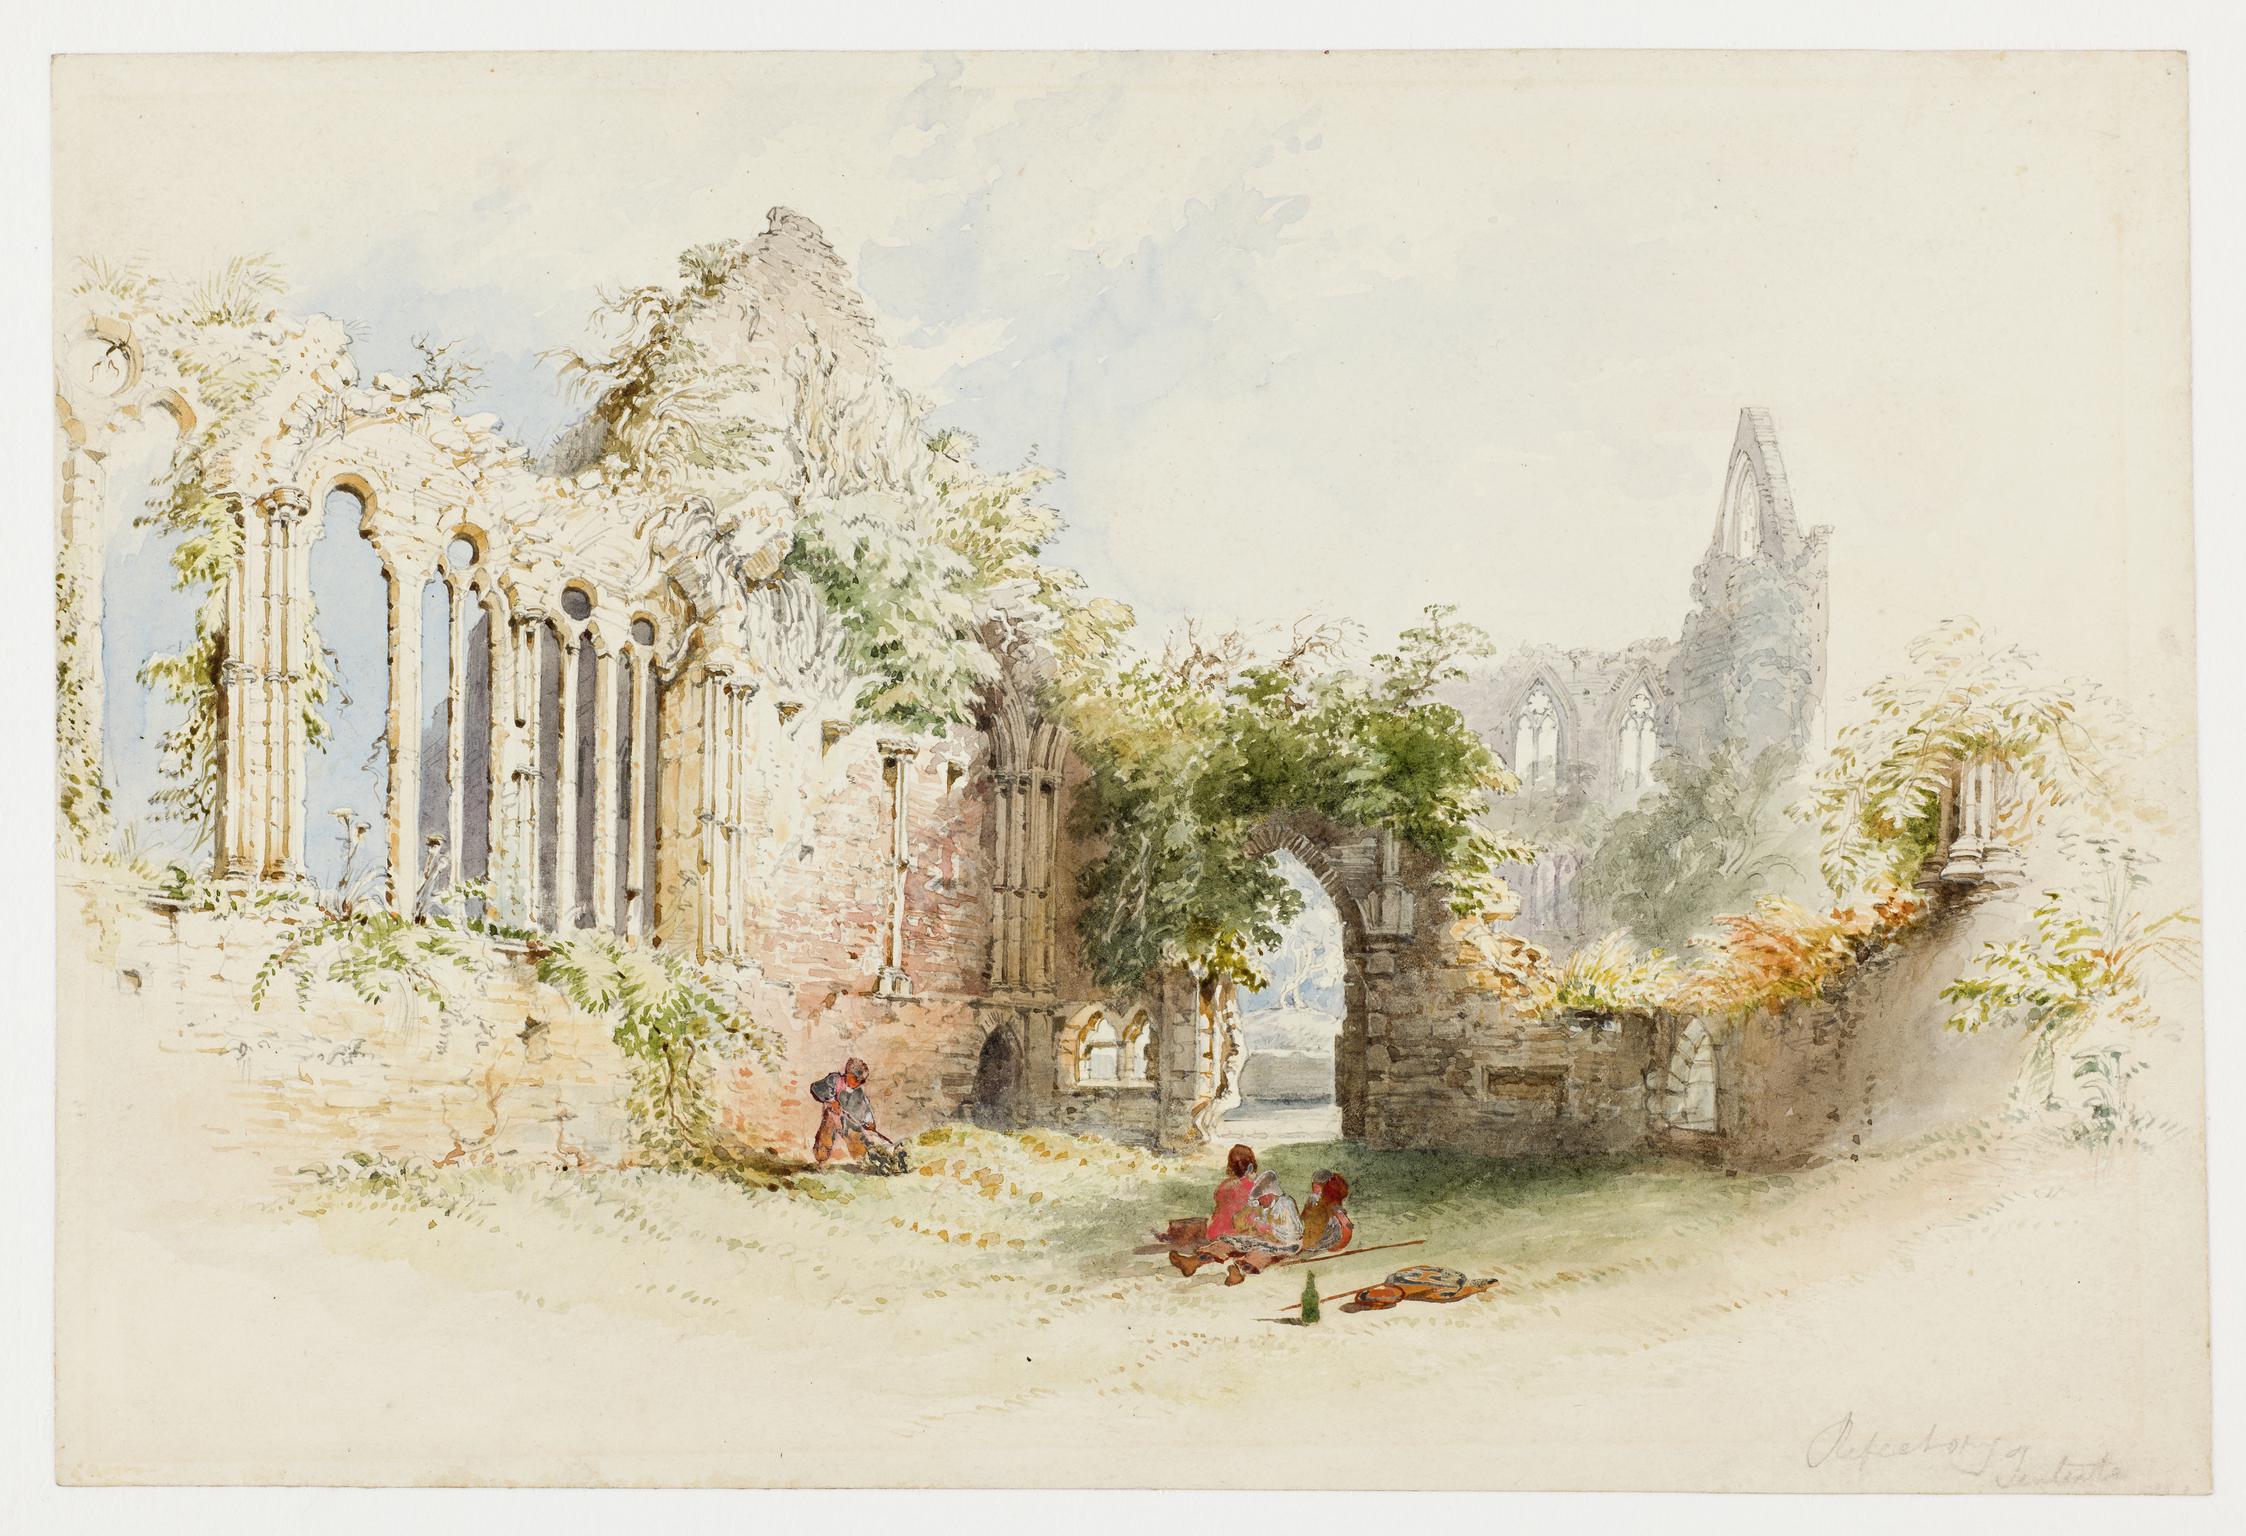 Tintern Abbey, the refectory